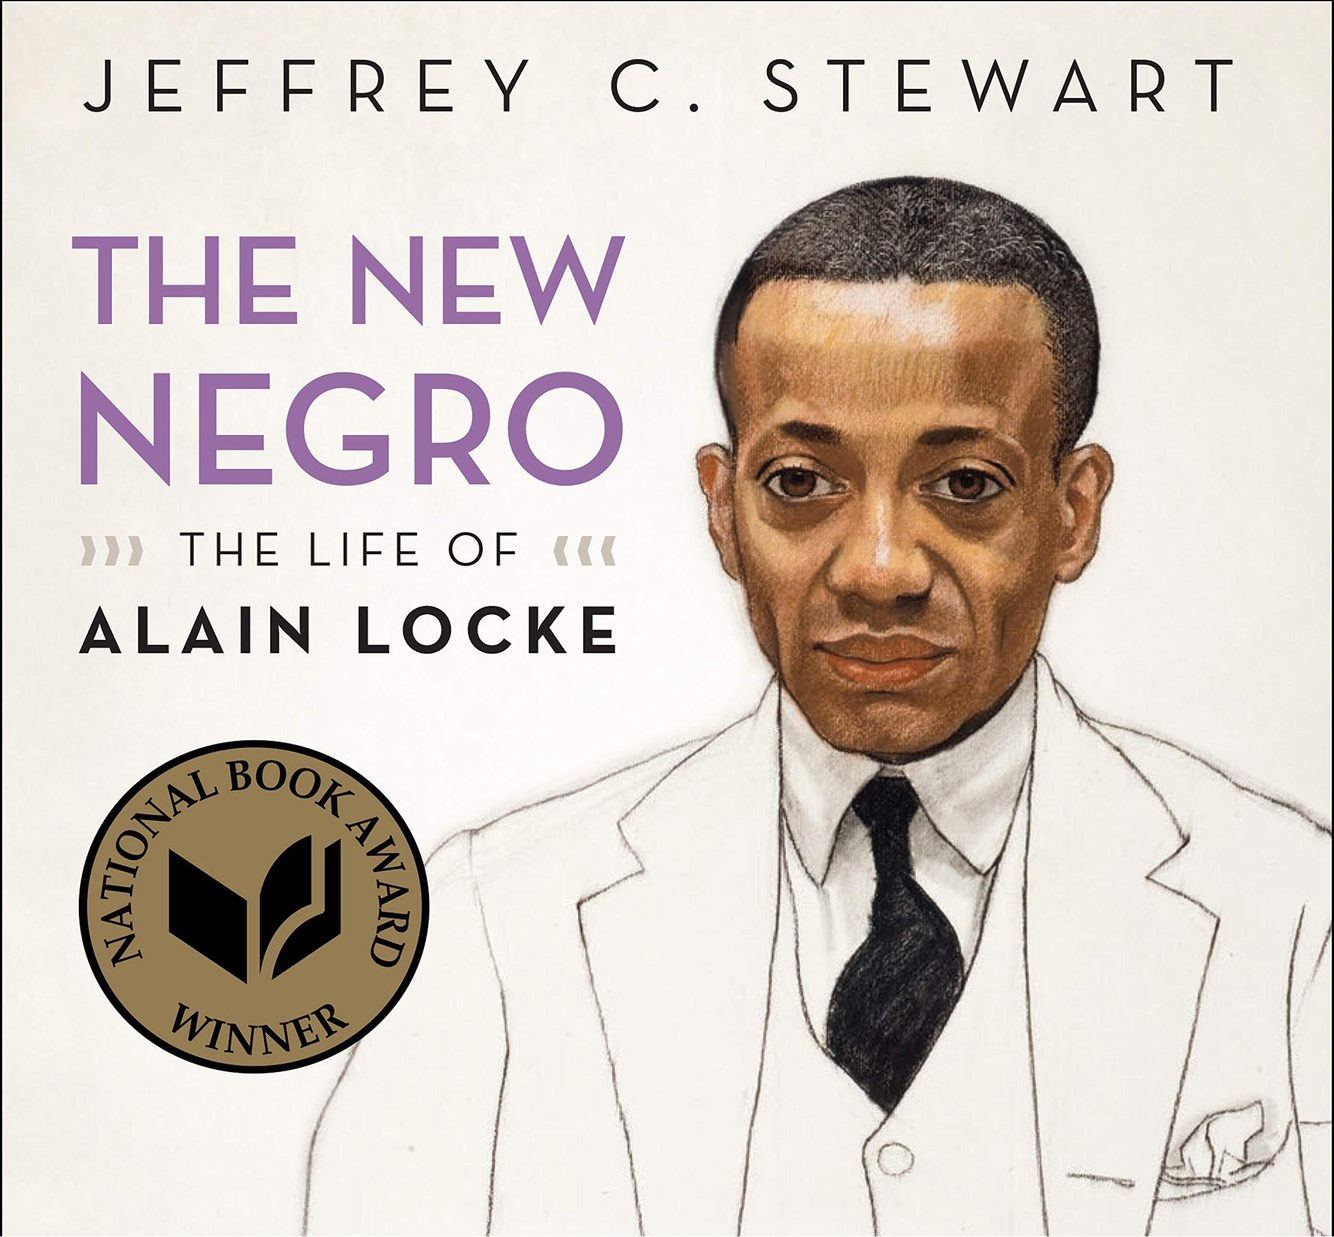 The new negro: The life of Alain Locke, Jeffrey C Stewart, National book award 